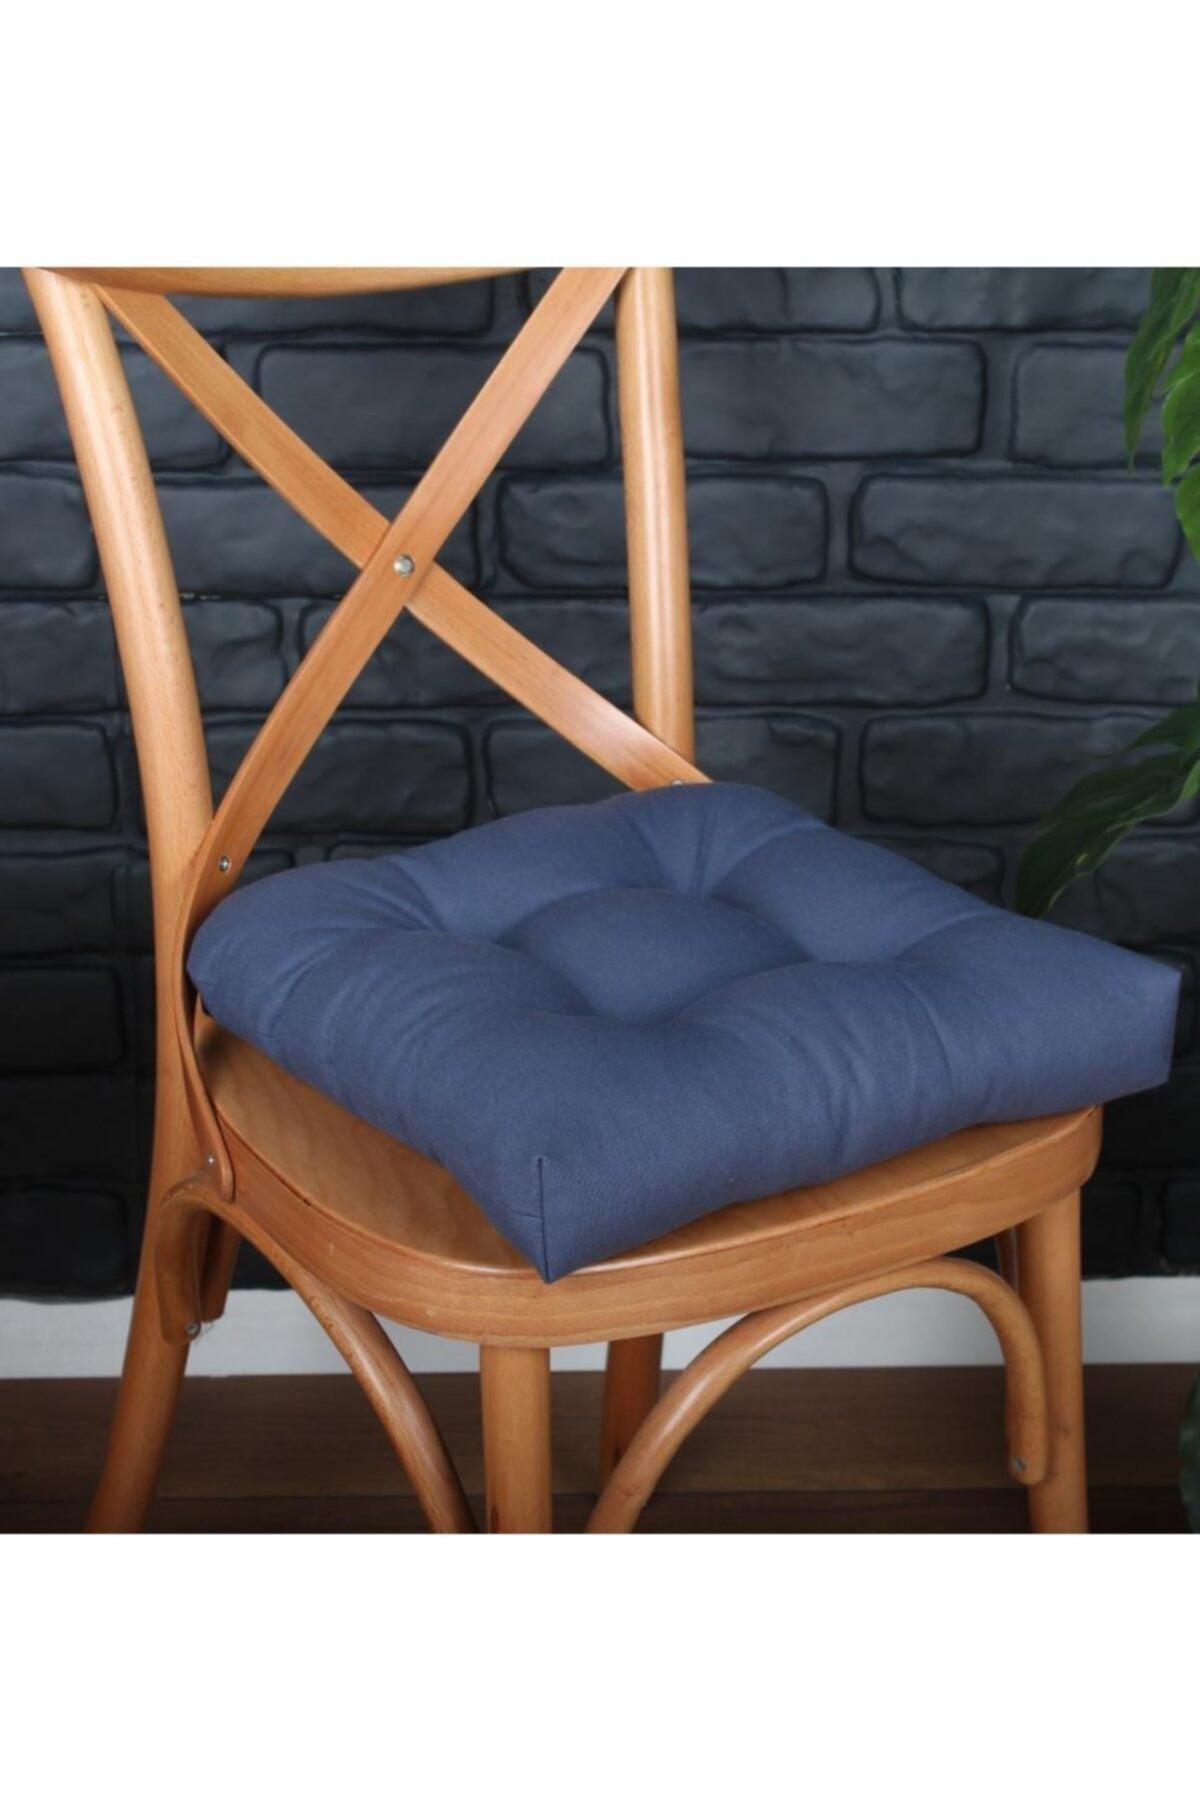 4 Pcs Lux Pofidik Petrol Chair Cushion Special Stitched Laced 40x40cm - Swordslife